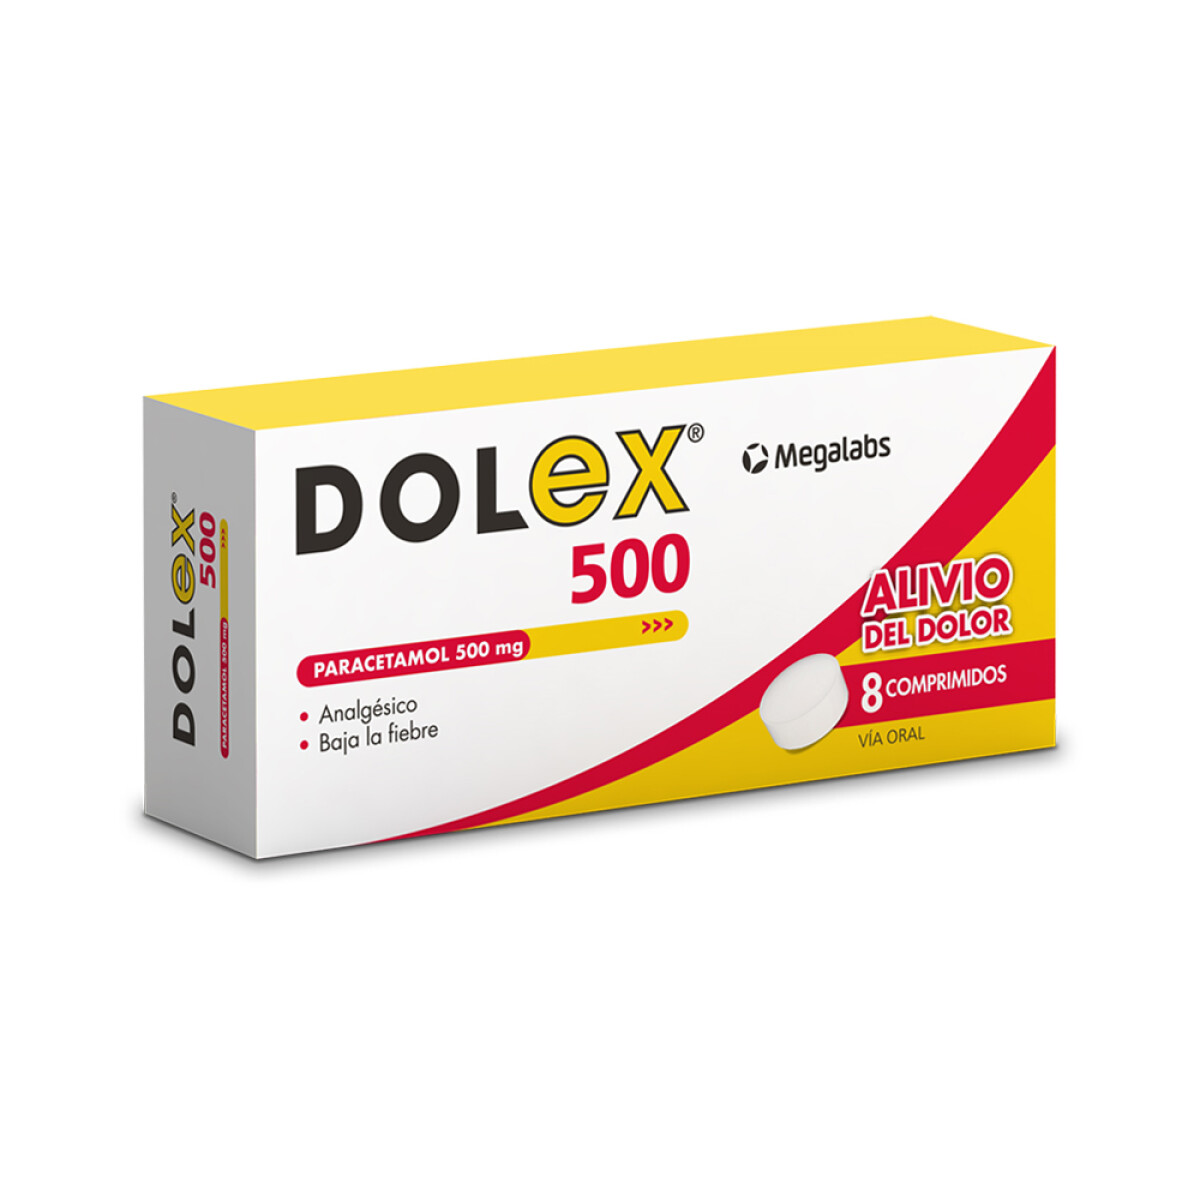 DOLEX 500 8 COMPRIMIDOS 